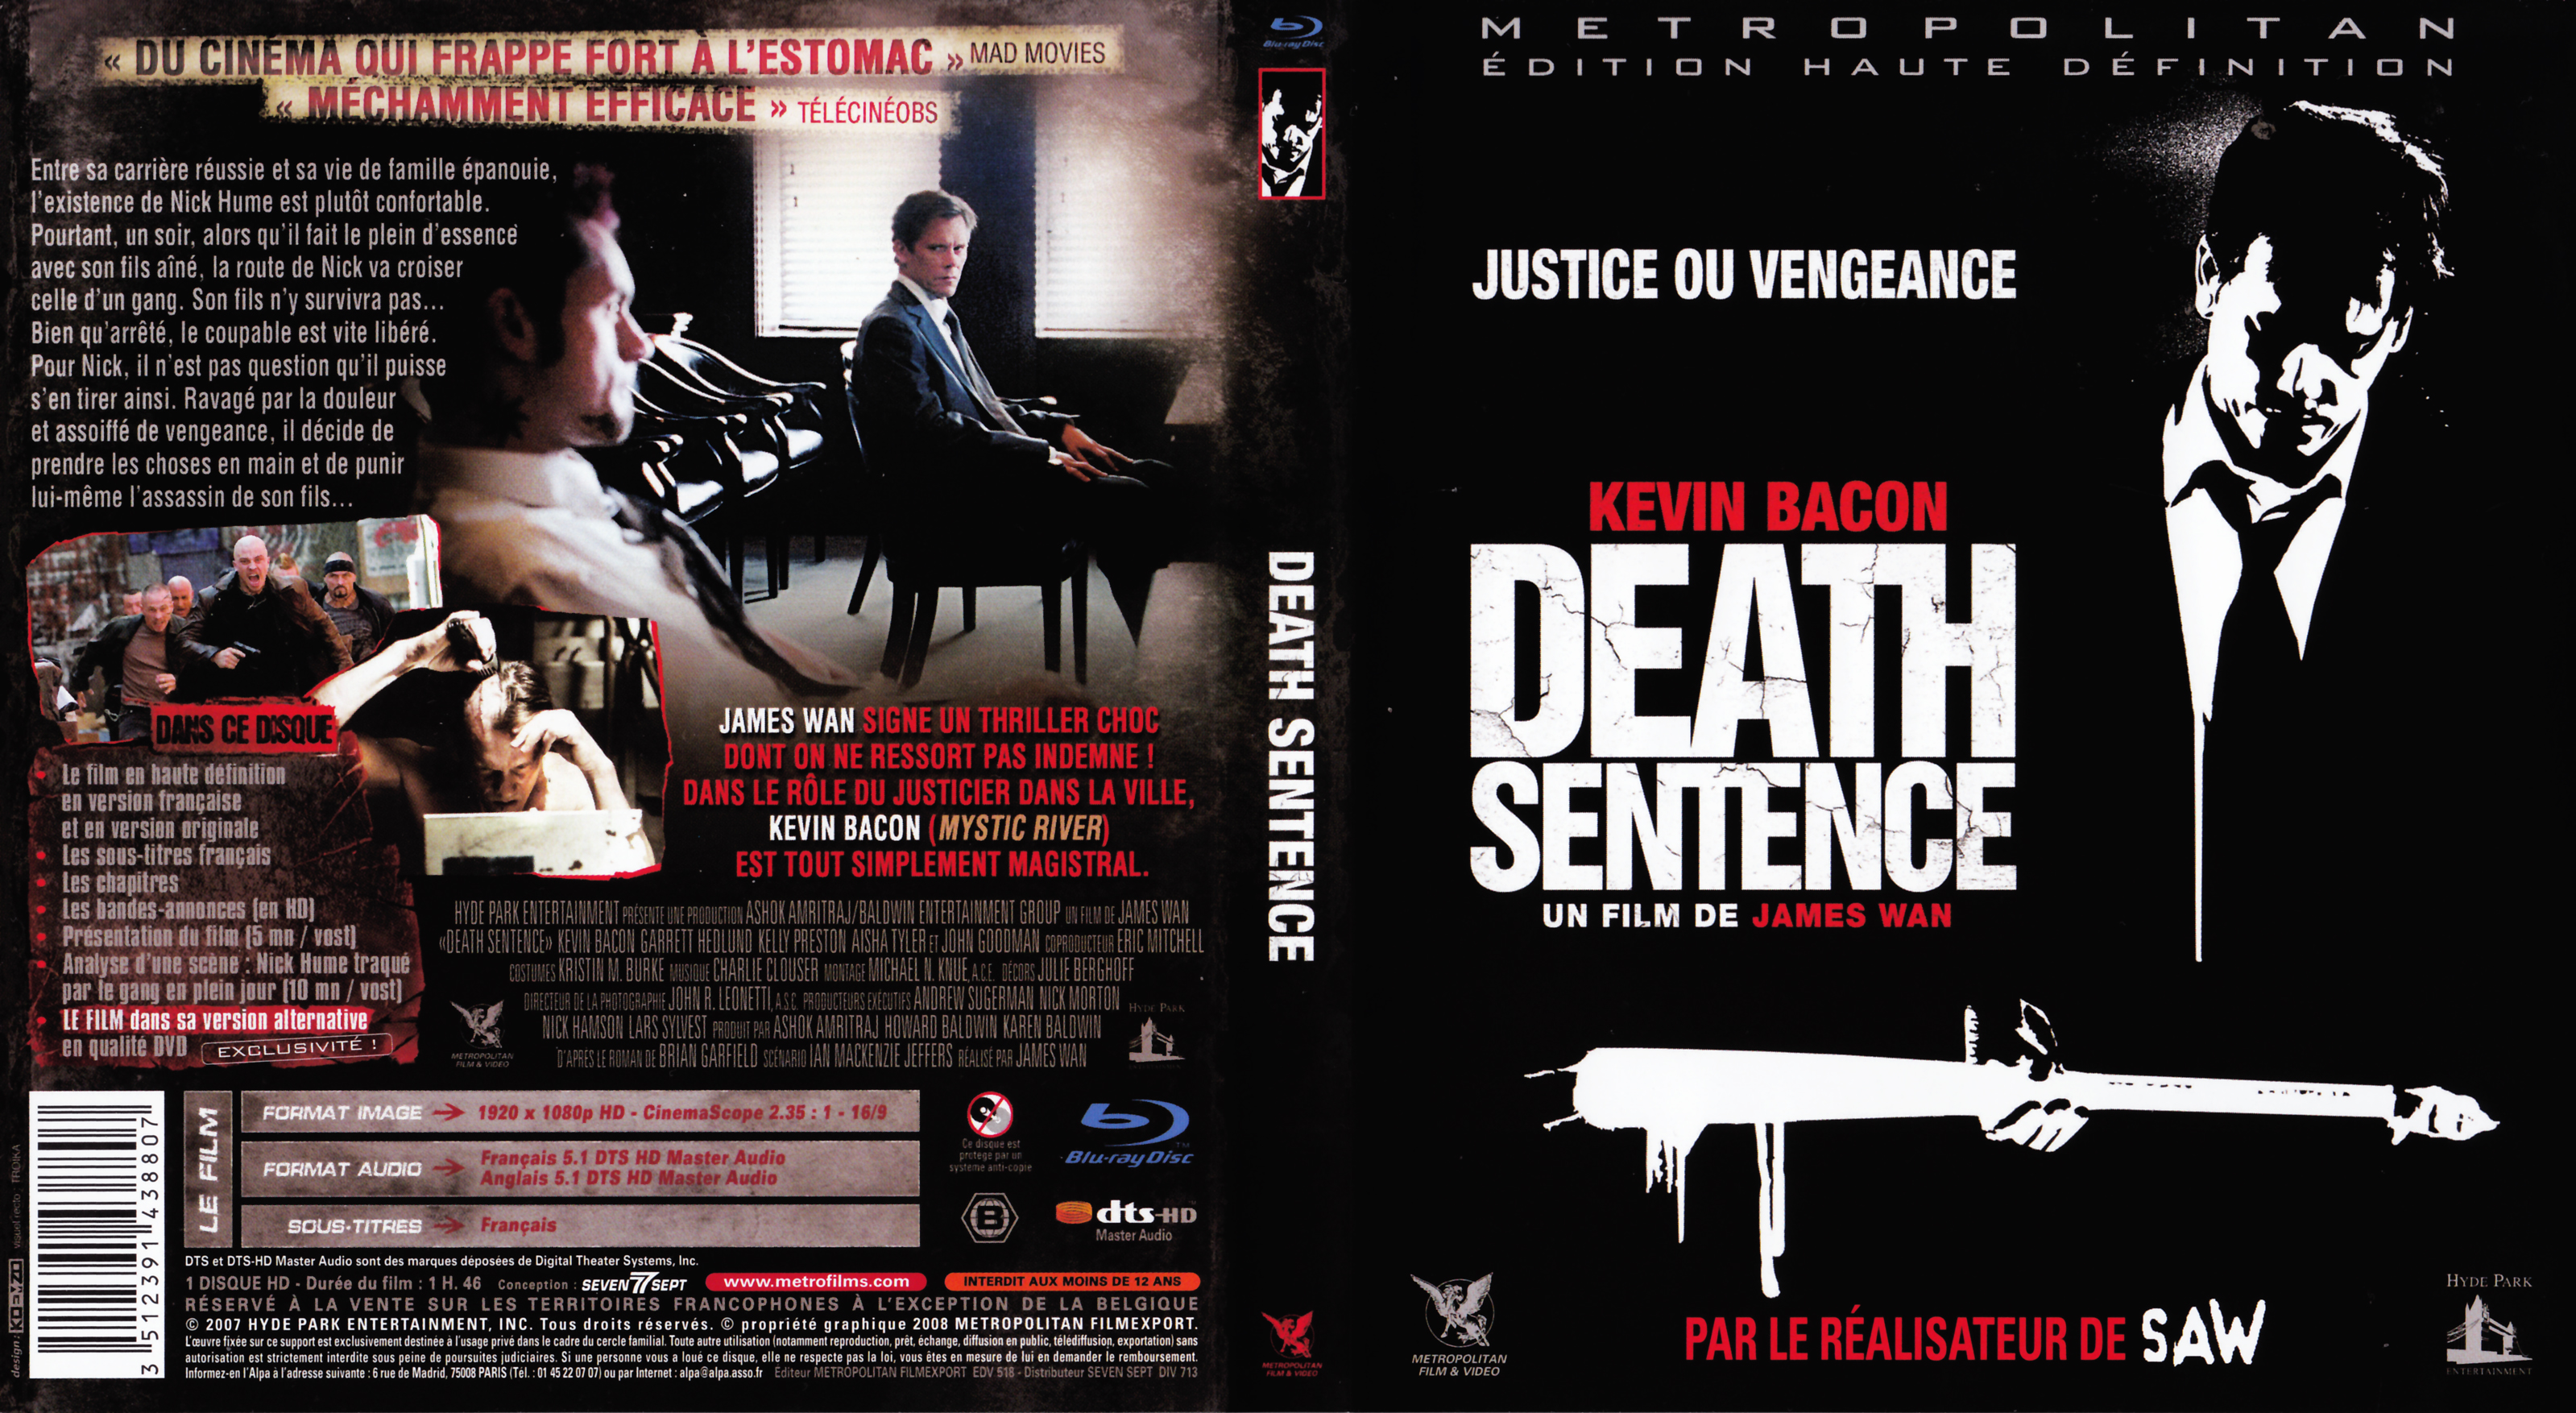 Jaquette DVD Death sentence (BLU-RAY)